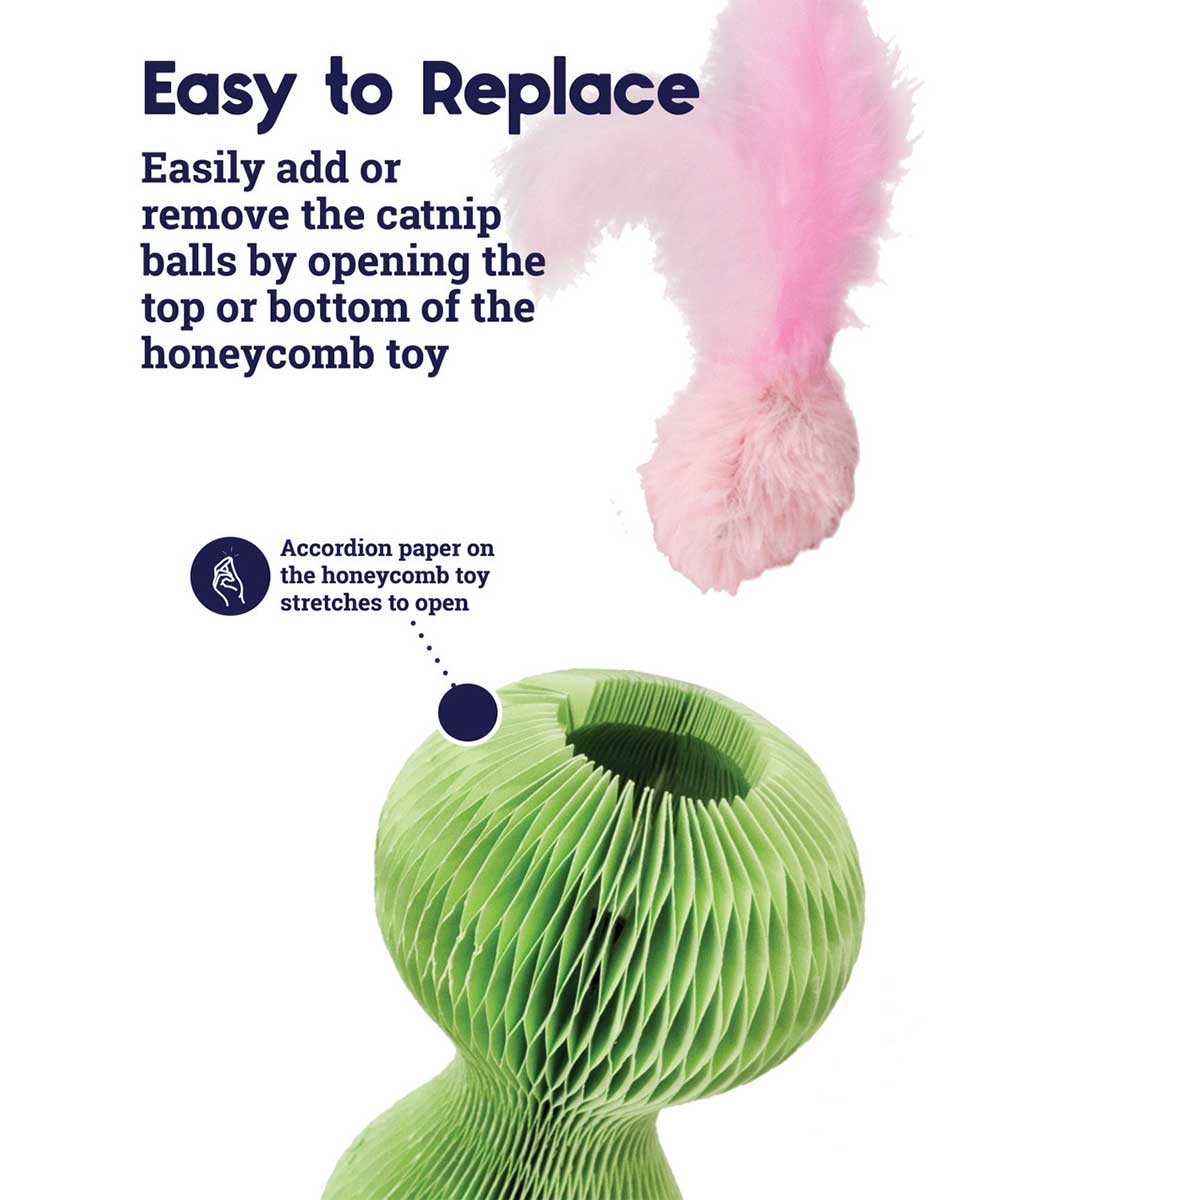 Honeycomb Hide-A-Ball Green Catnip Toy